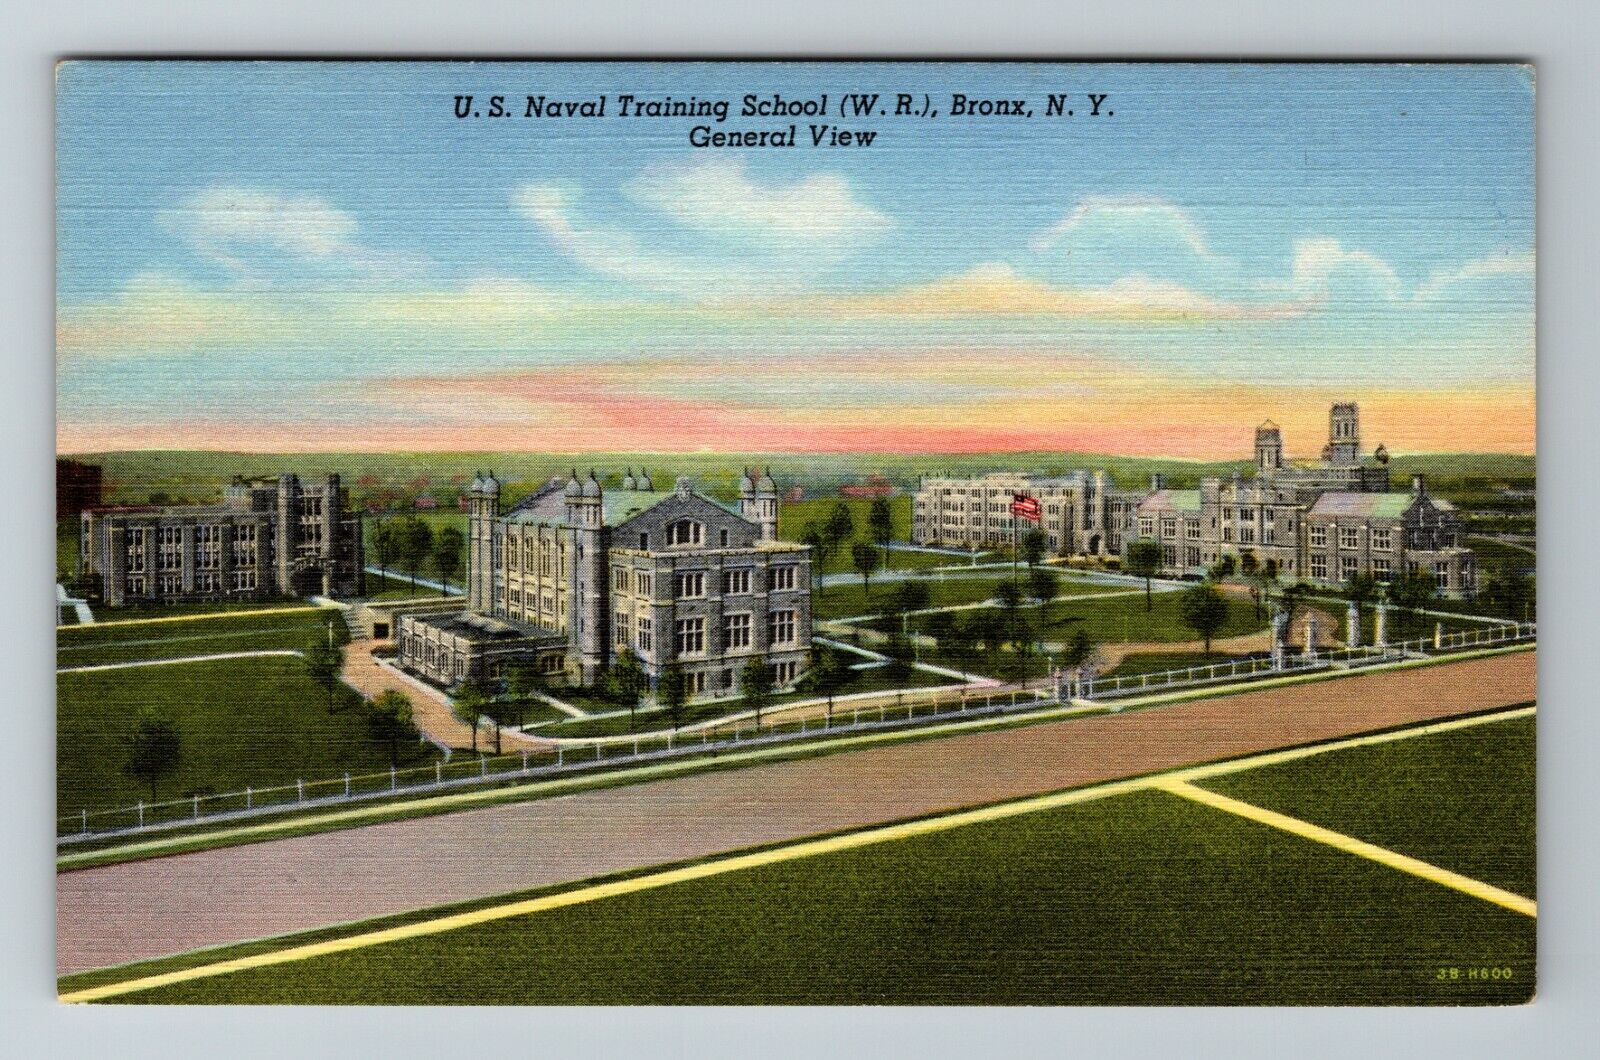 Bronx NY-New York City Naval Training School General View  Vintage Postcard